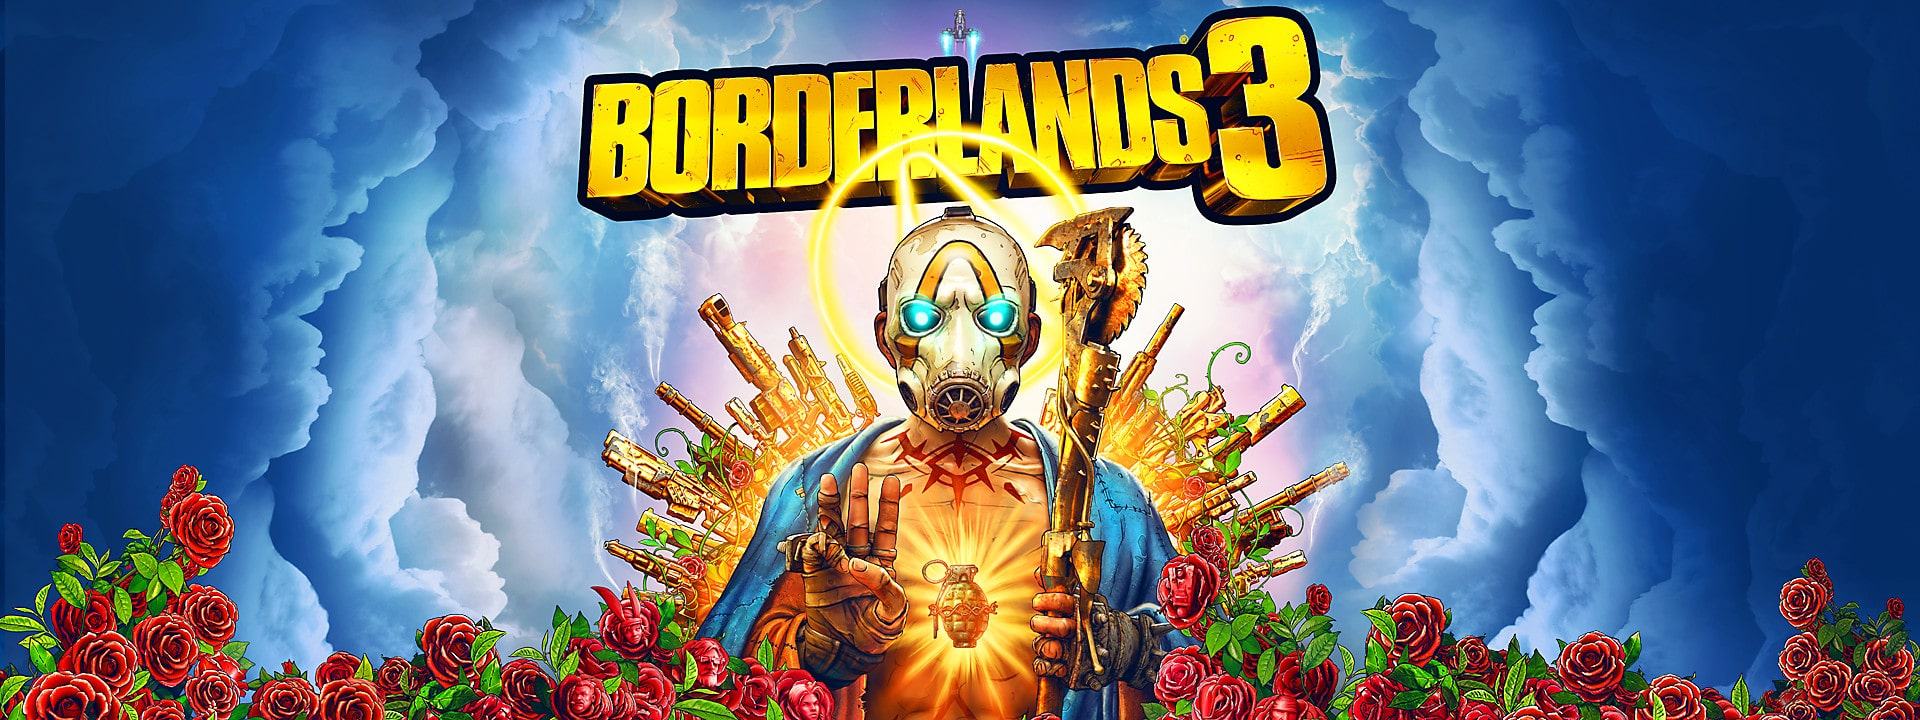 Il film su Borderlands è ufficiale, dirigerà Eli Roth 6